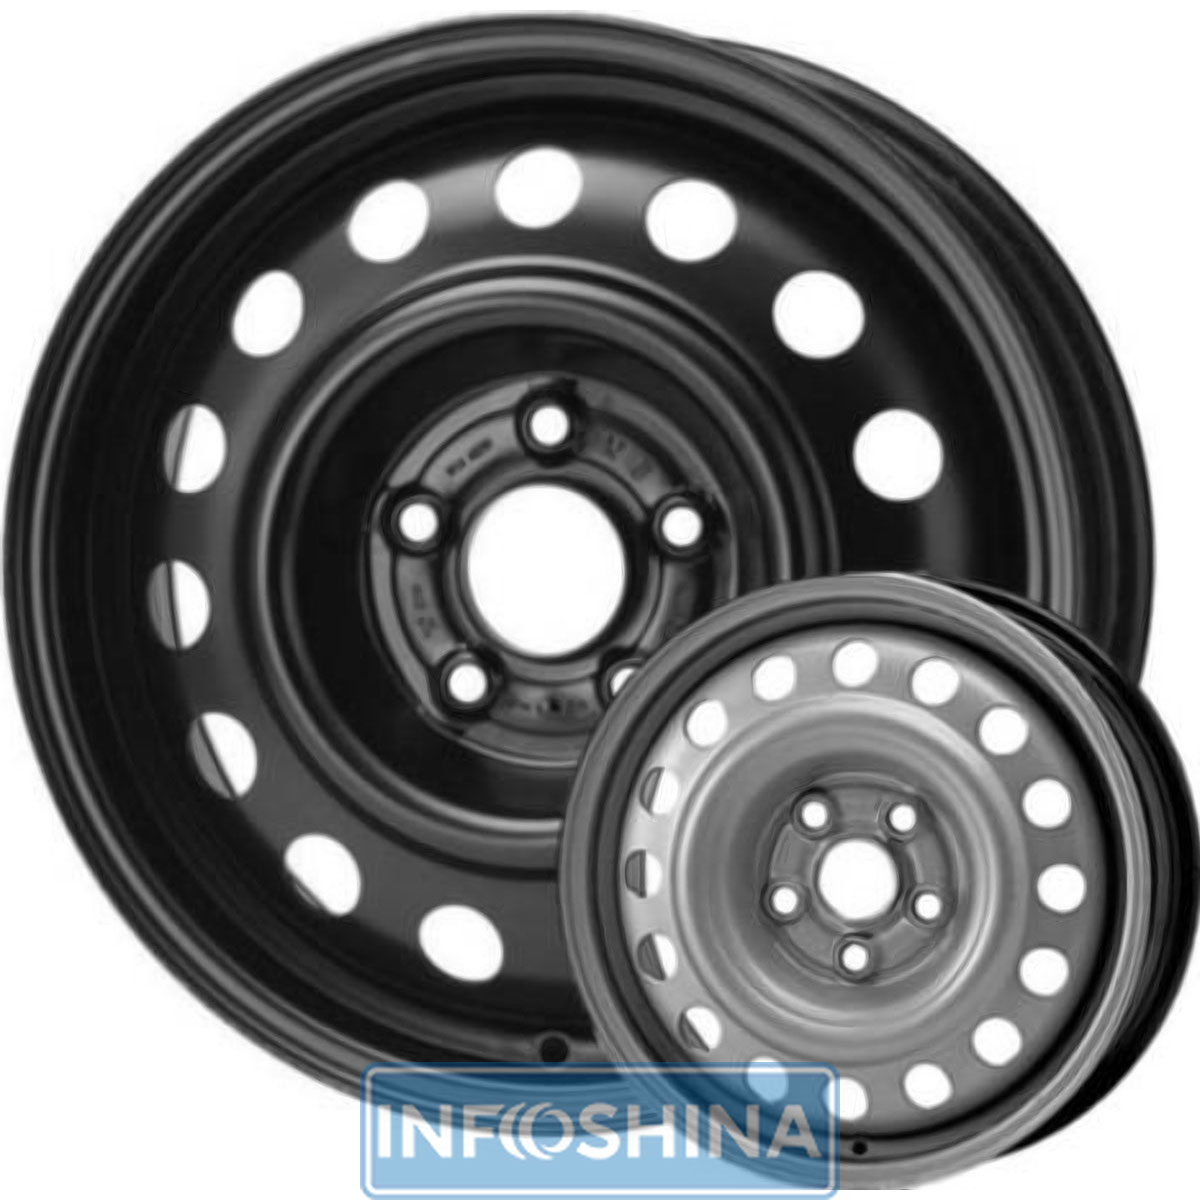 Купити диски Steel Wheels HS-SW028 S R14 W5.5 PCD4x108 ET47 DIA63.3